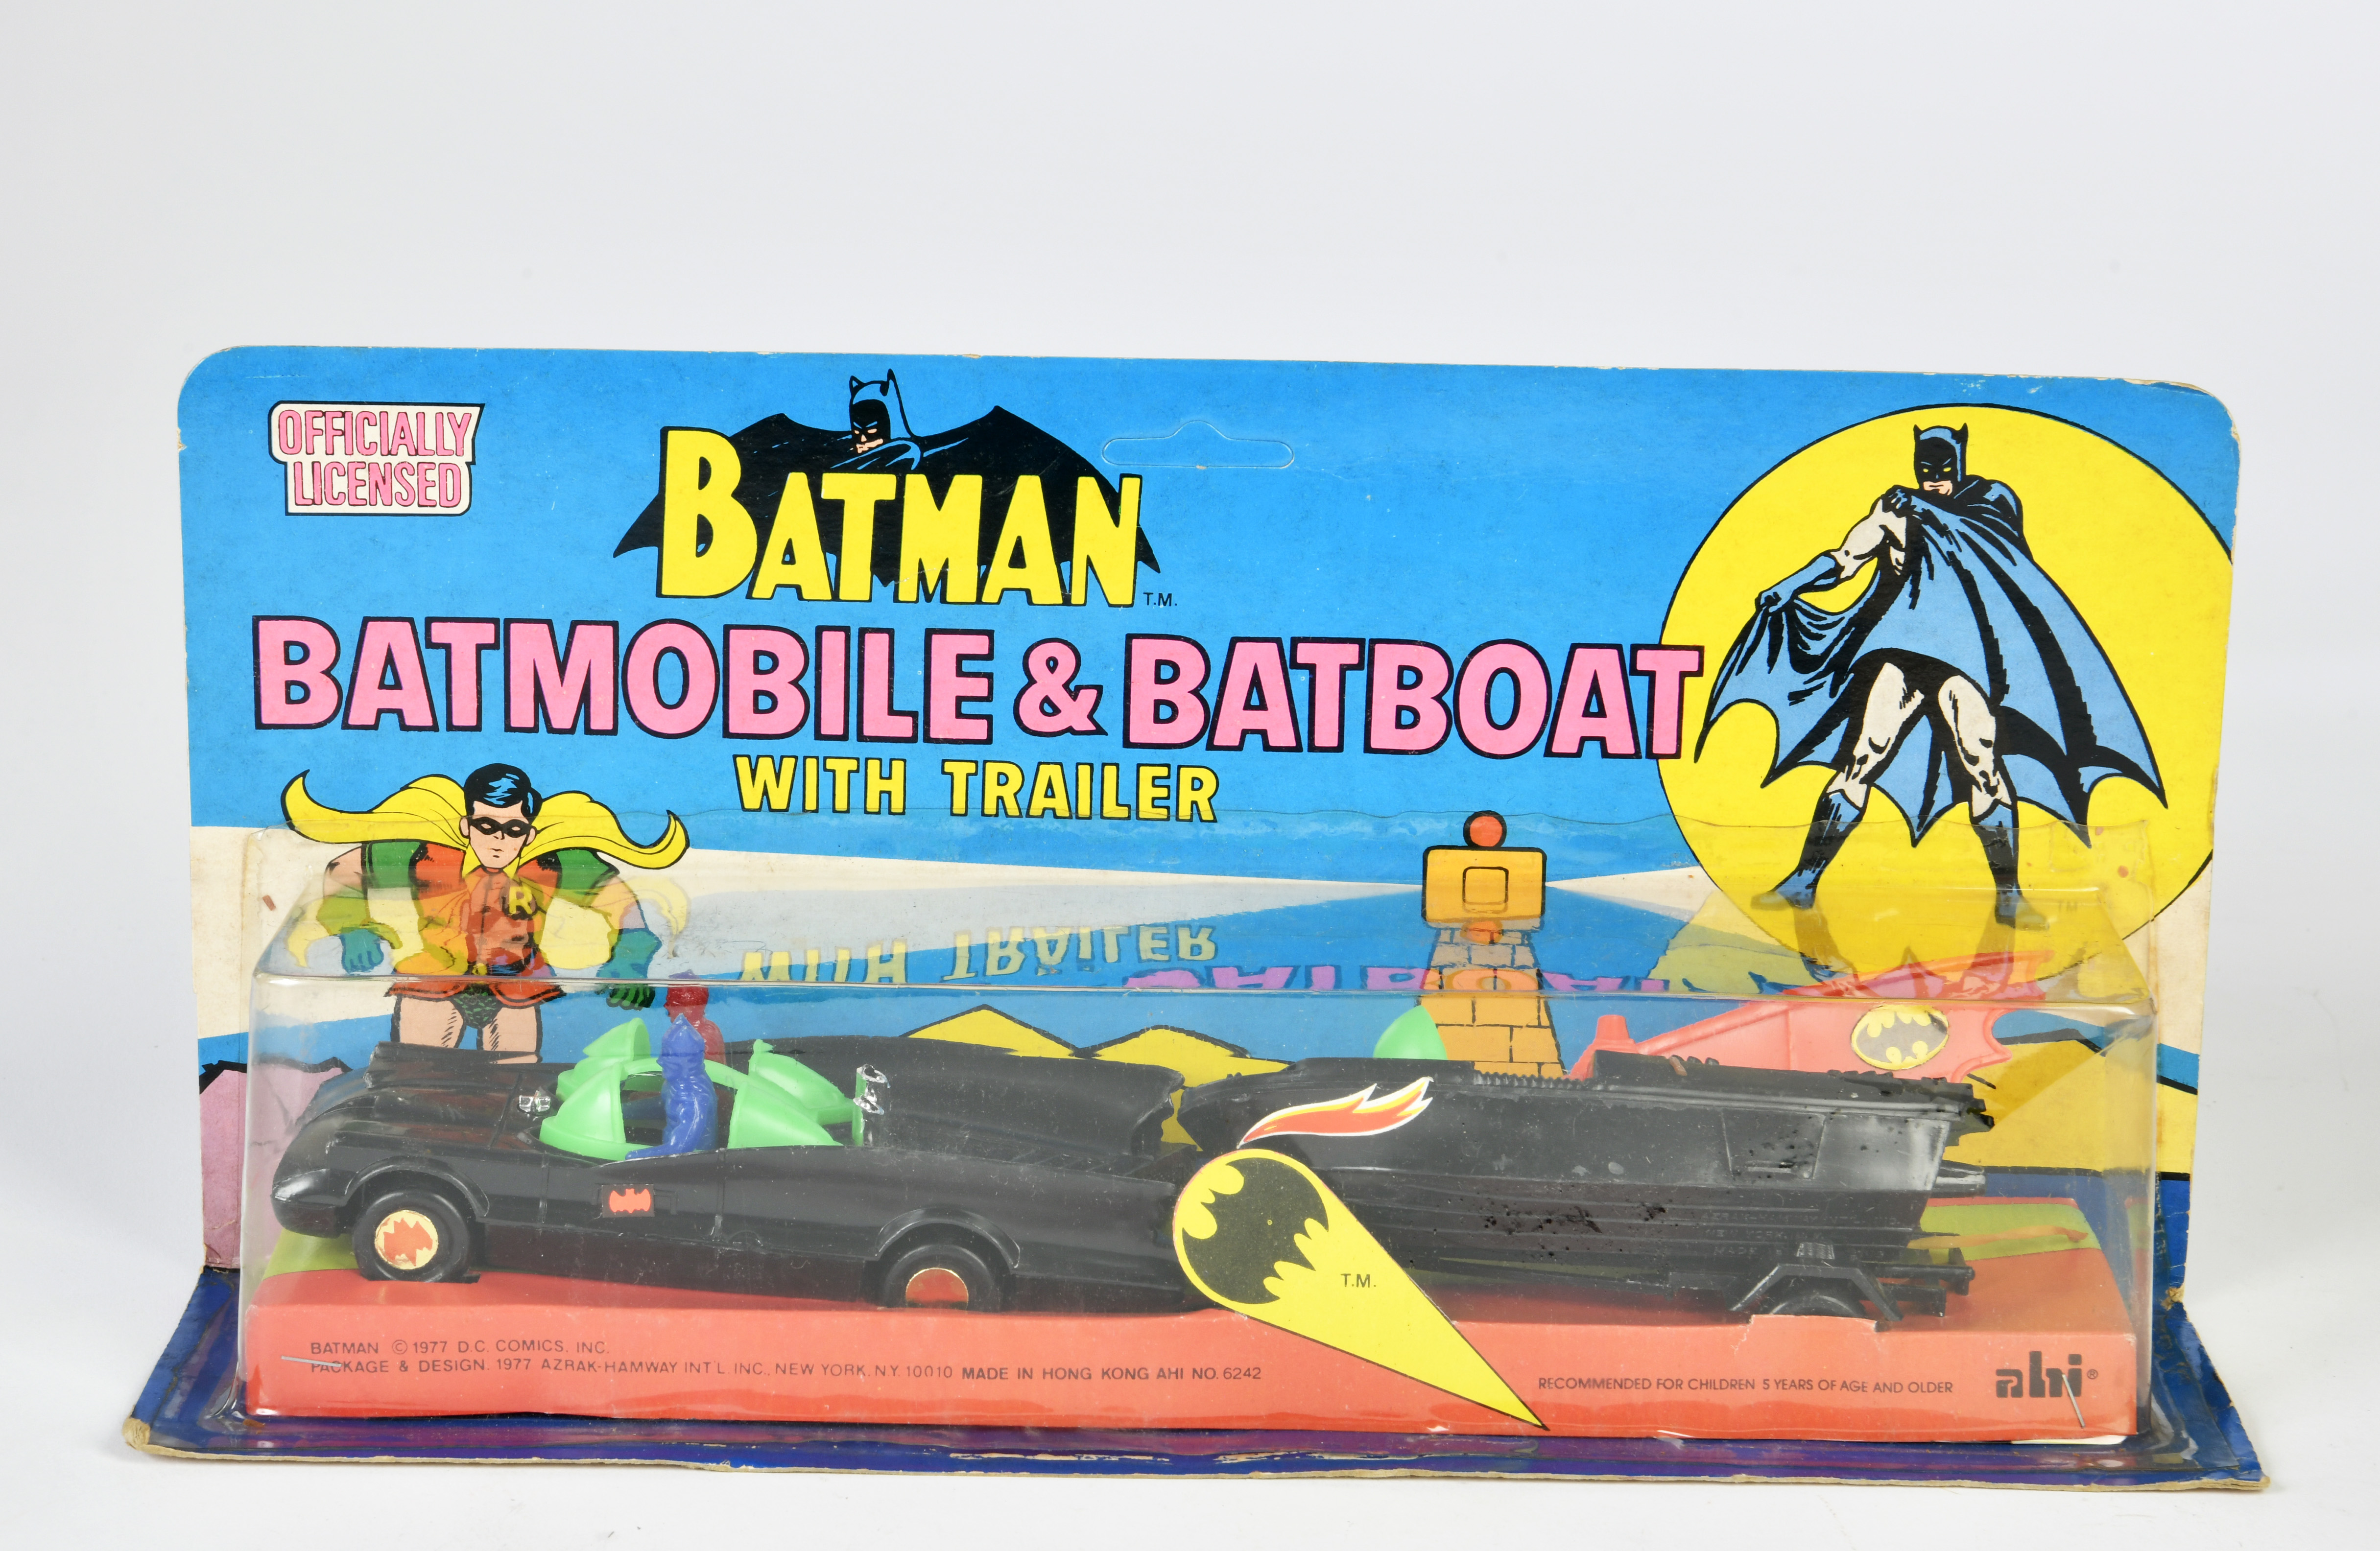 Ahi, Batman Batmobile & Batboat, Hong Kong, C 1